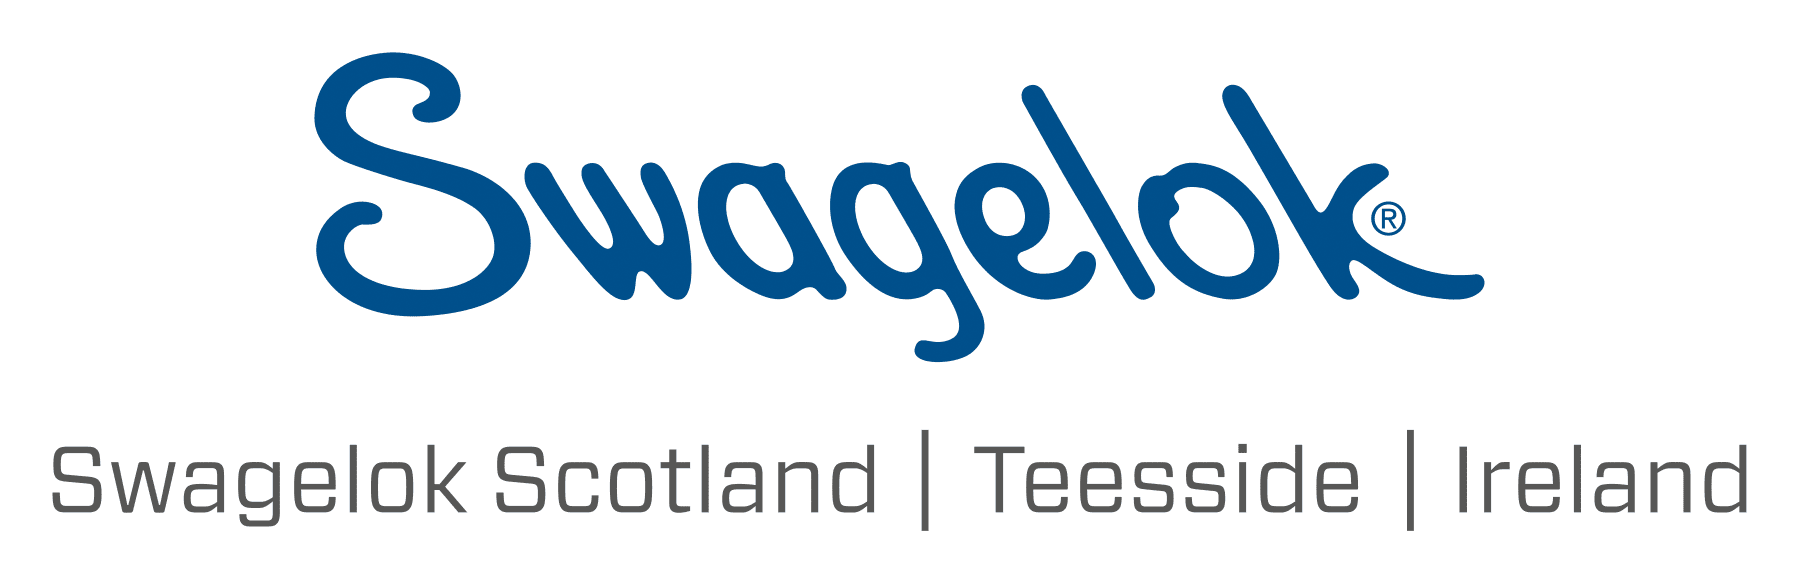 Swagelok Locations Logo